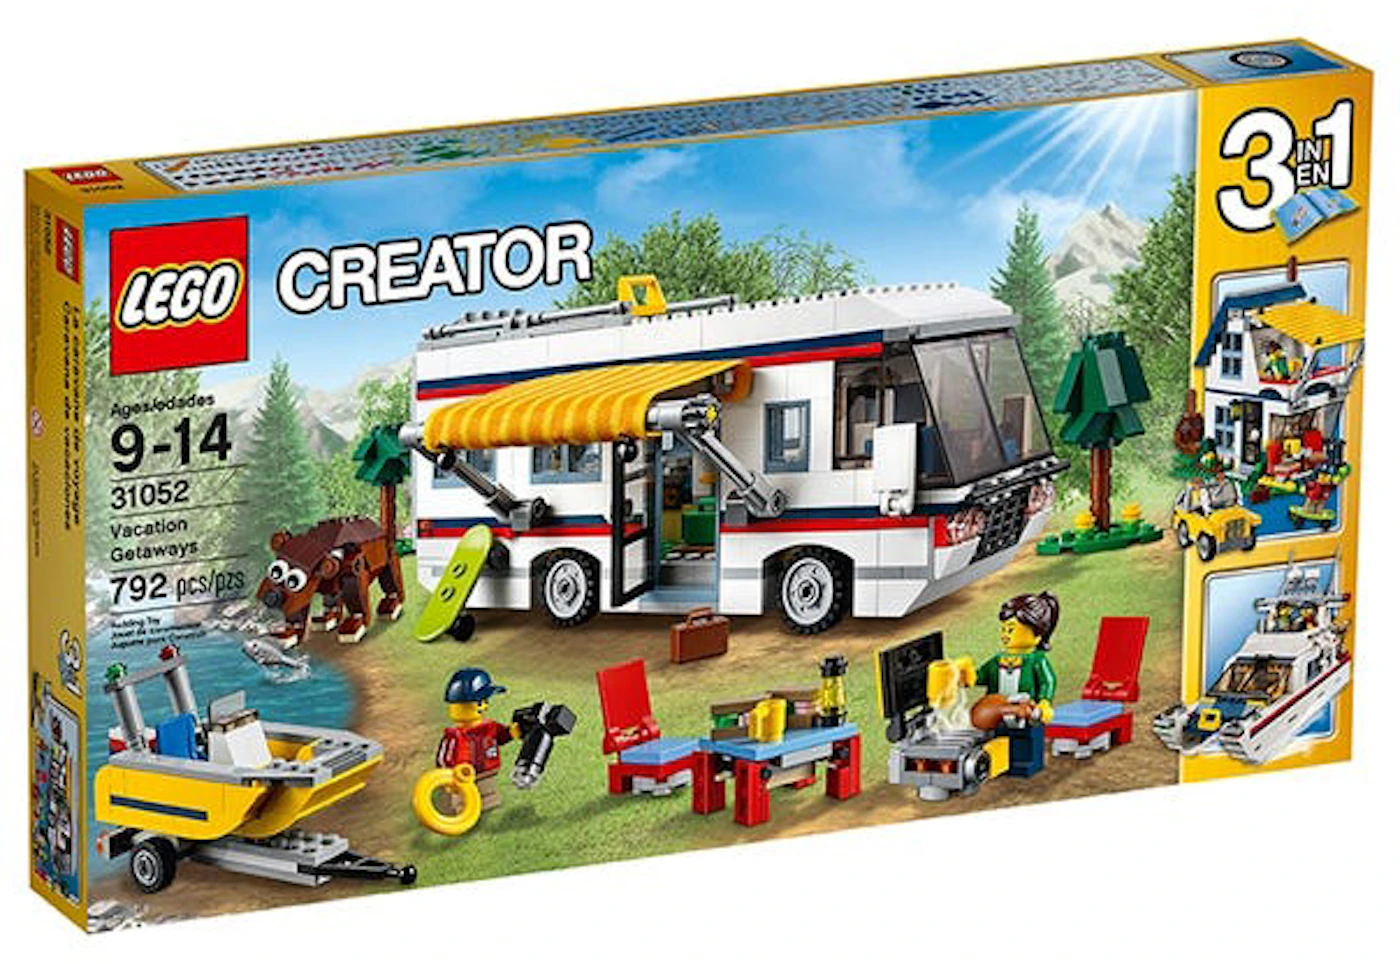 LEGO Creator Red Jeep Set 7803 - US